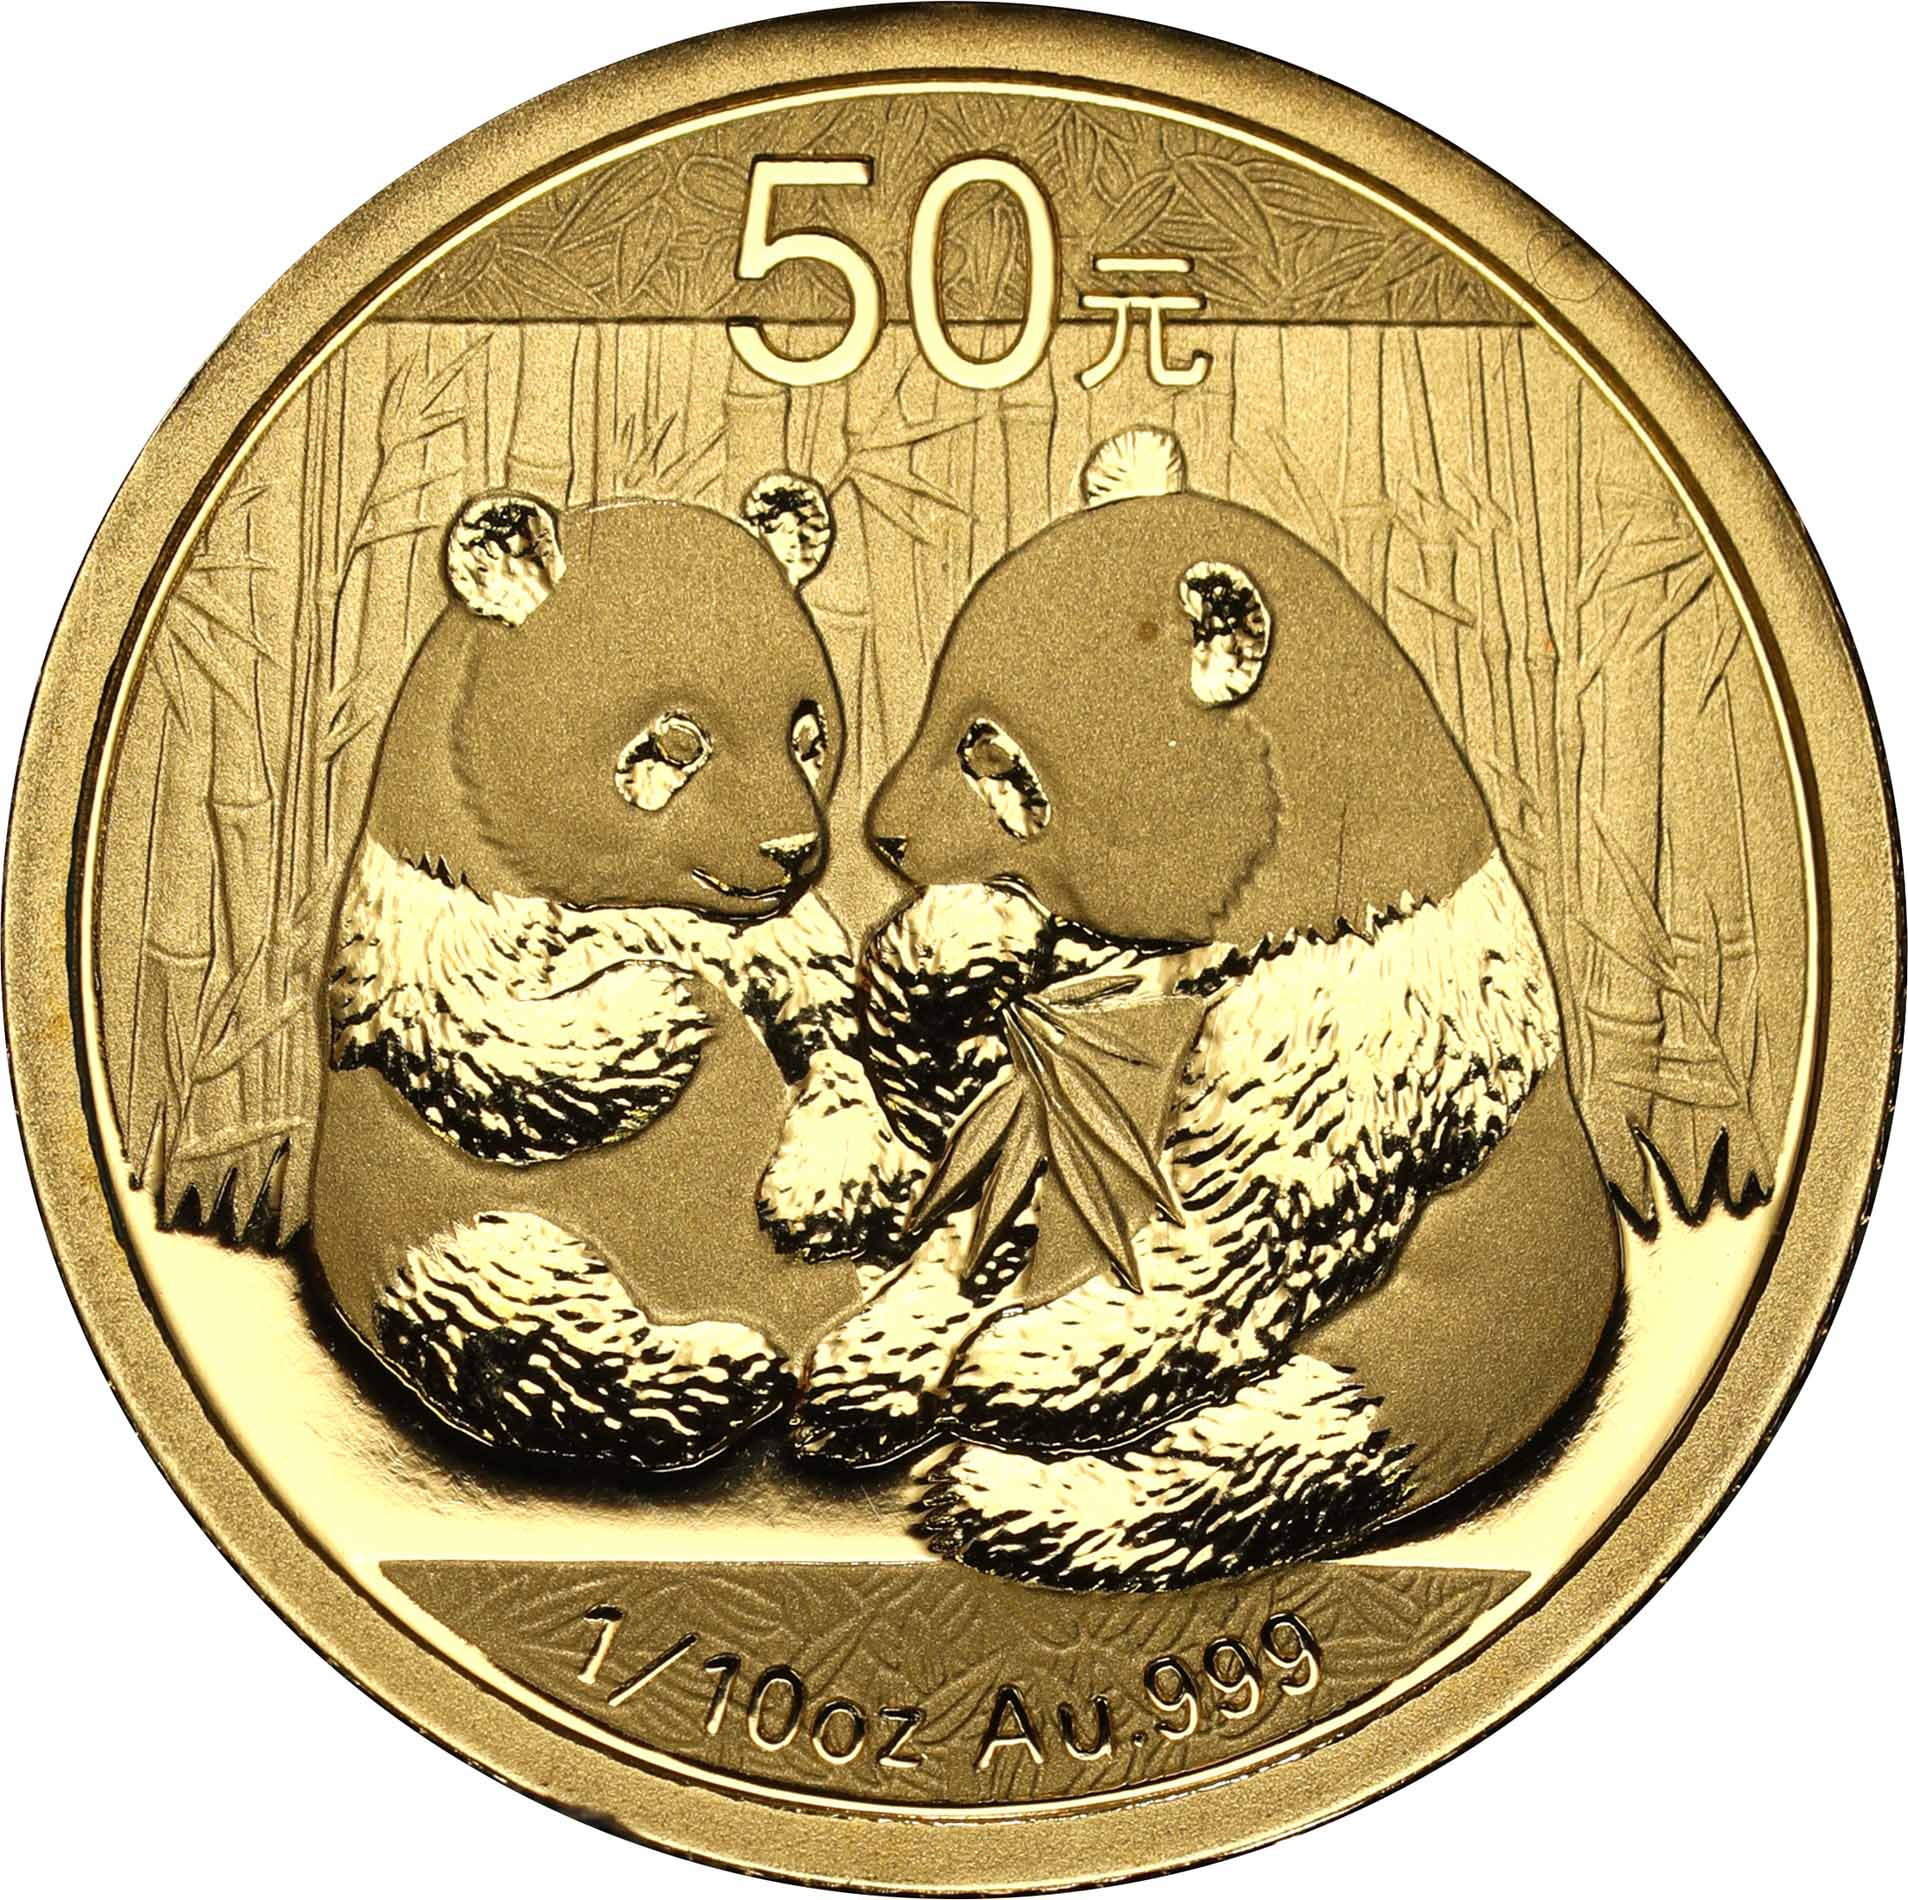 Chiny 50 Yuan (juanów) 2009 Panda Wielka 1/10 uncji złota